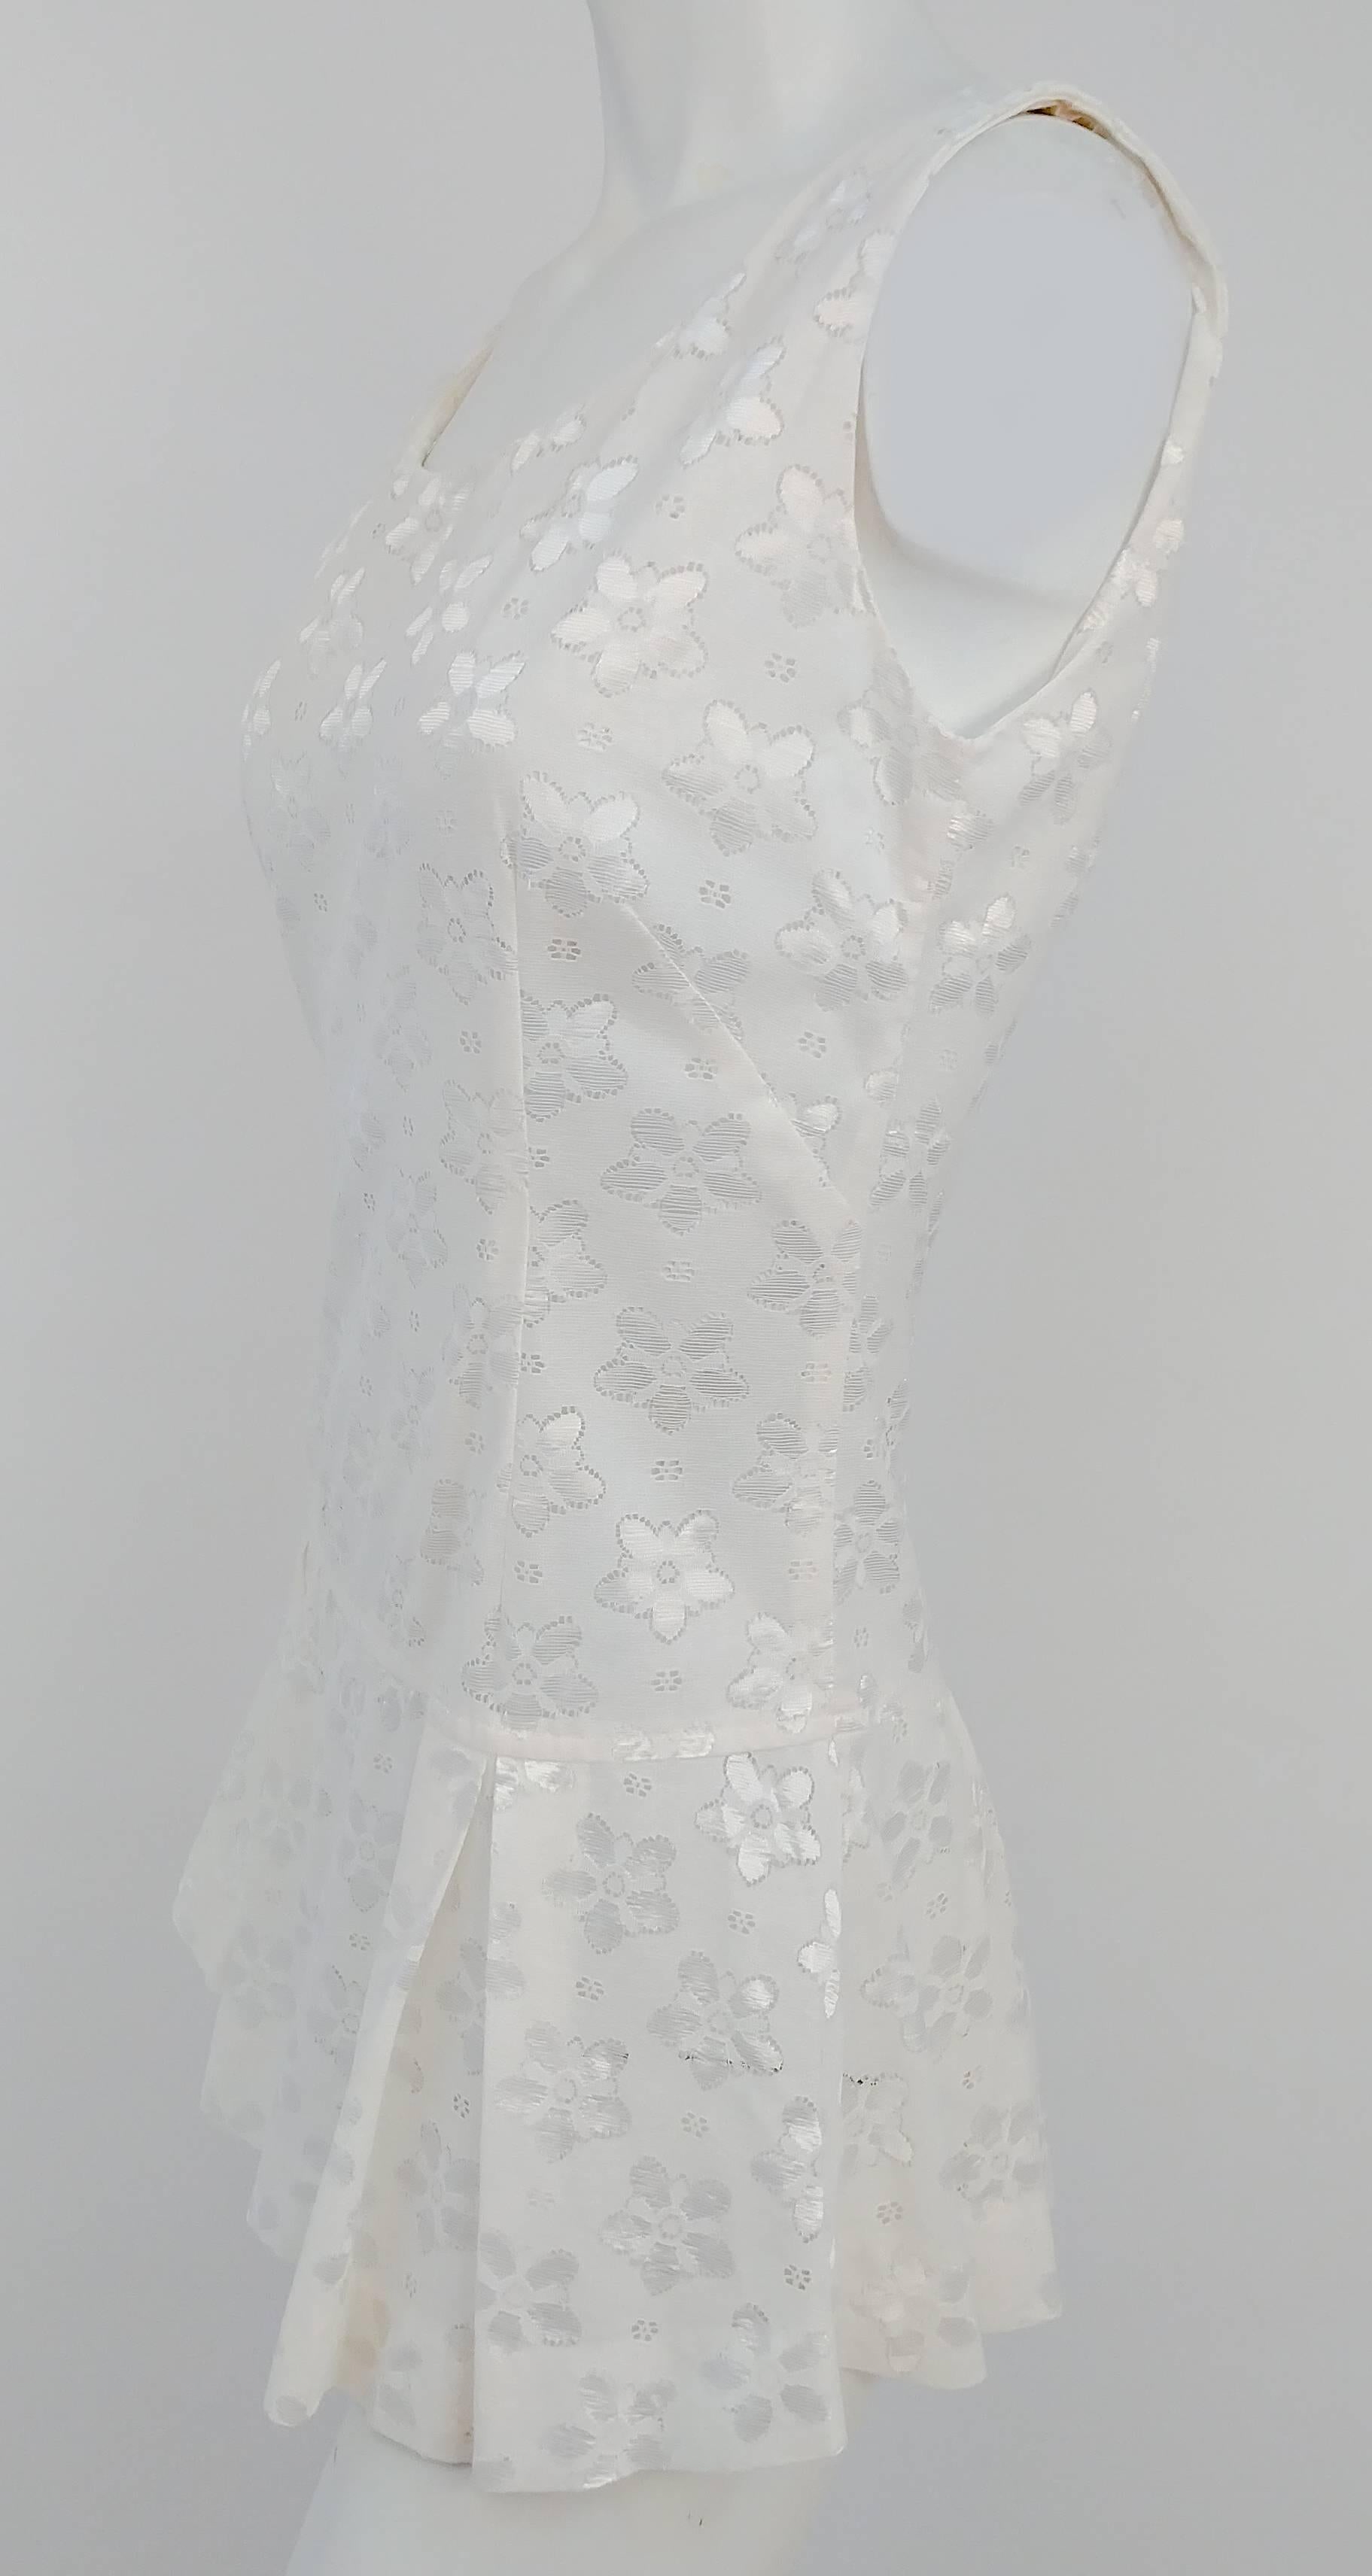 60s White Lace Tennis Dress. Drop waist, pleated skirt. Back zip closure. Unlined. 